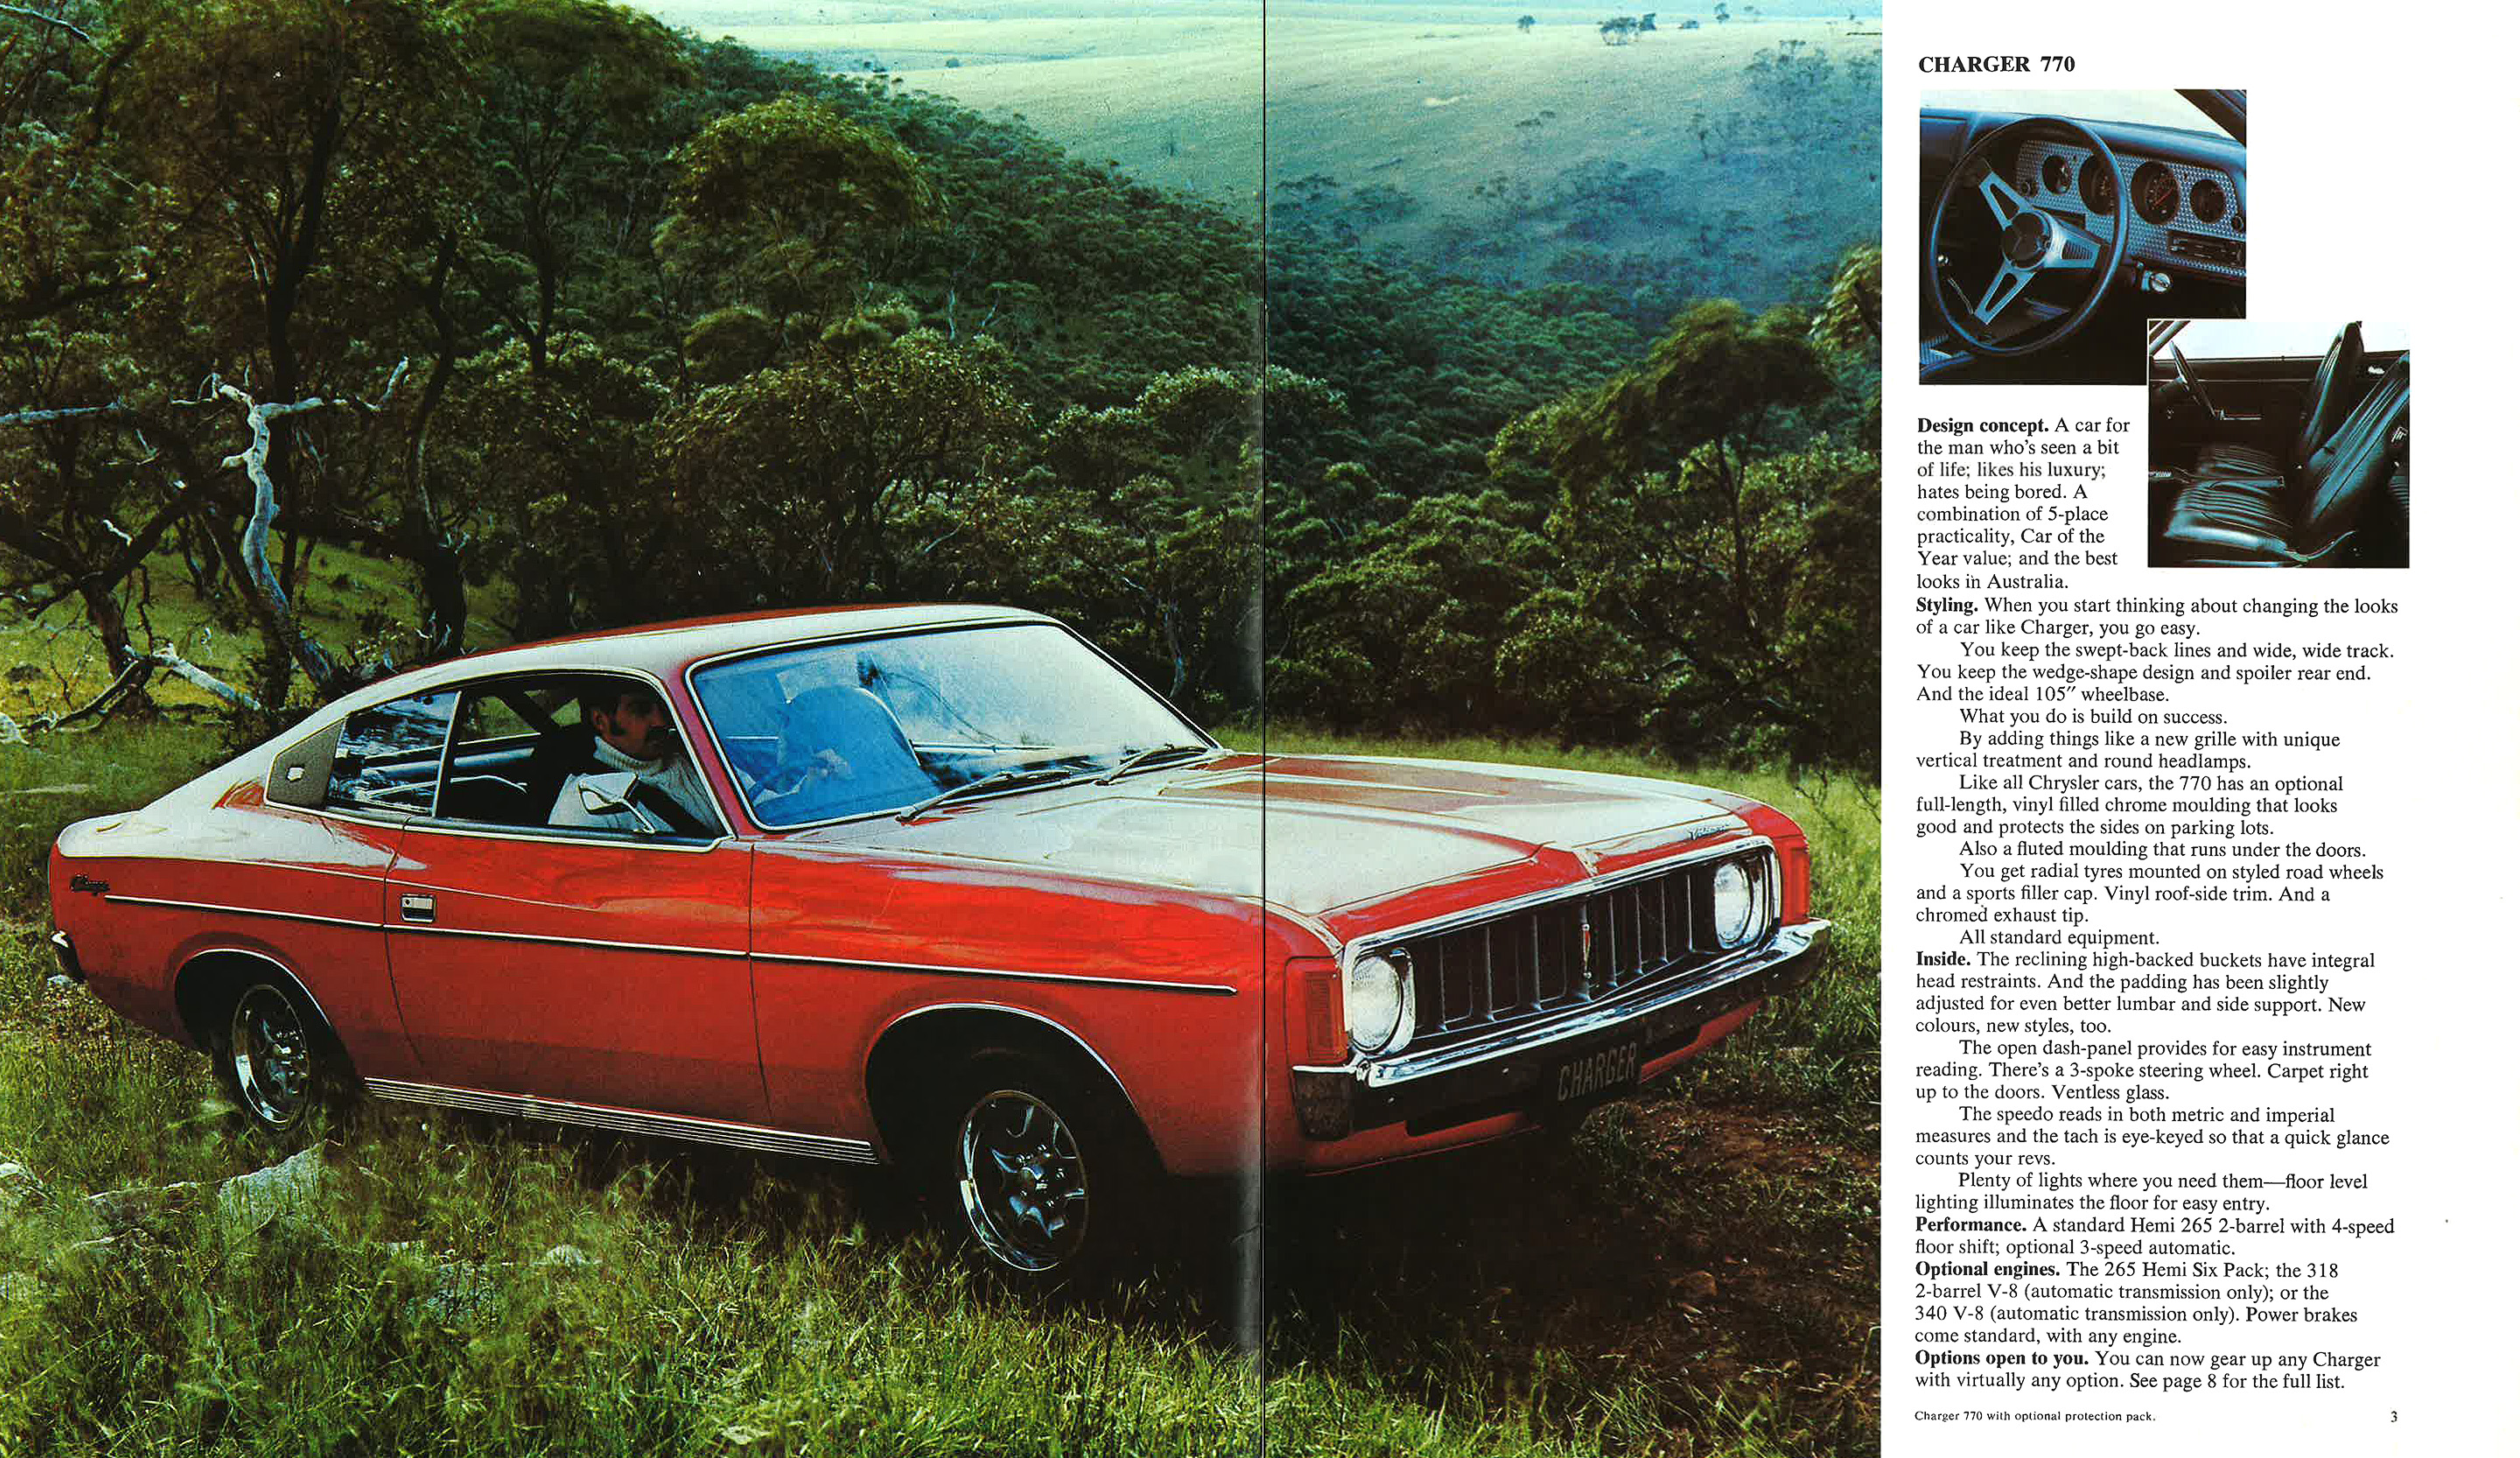 1973 Valiant VJ Charger - Australia page_02_03